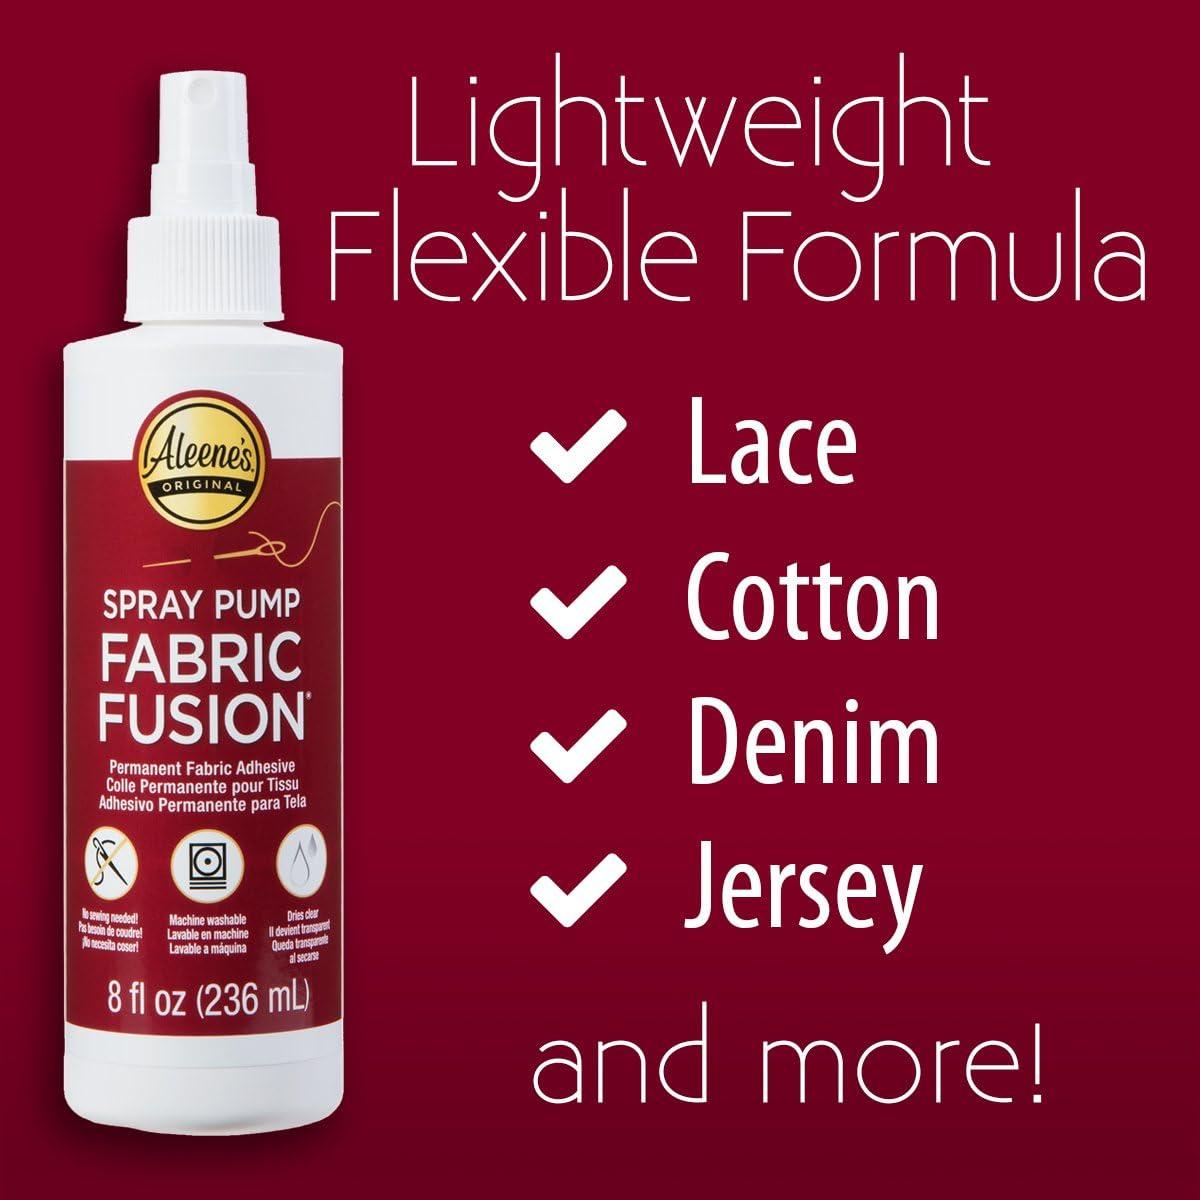 Aleene's Fusion Spray Pump, Fast Drying Permanent Fabric Adhesive